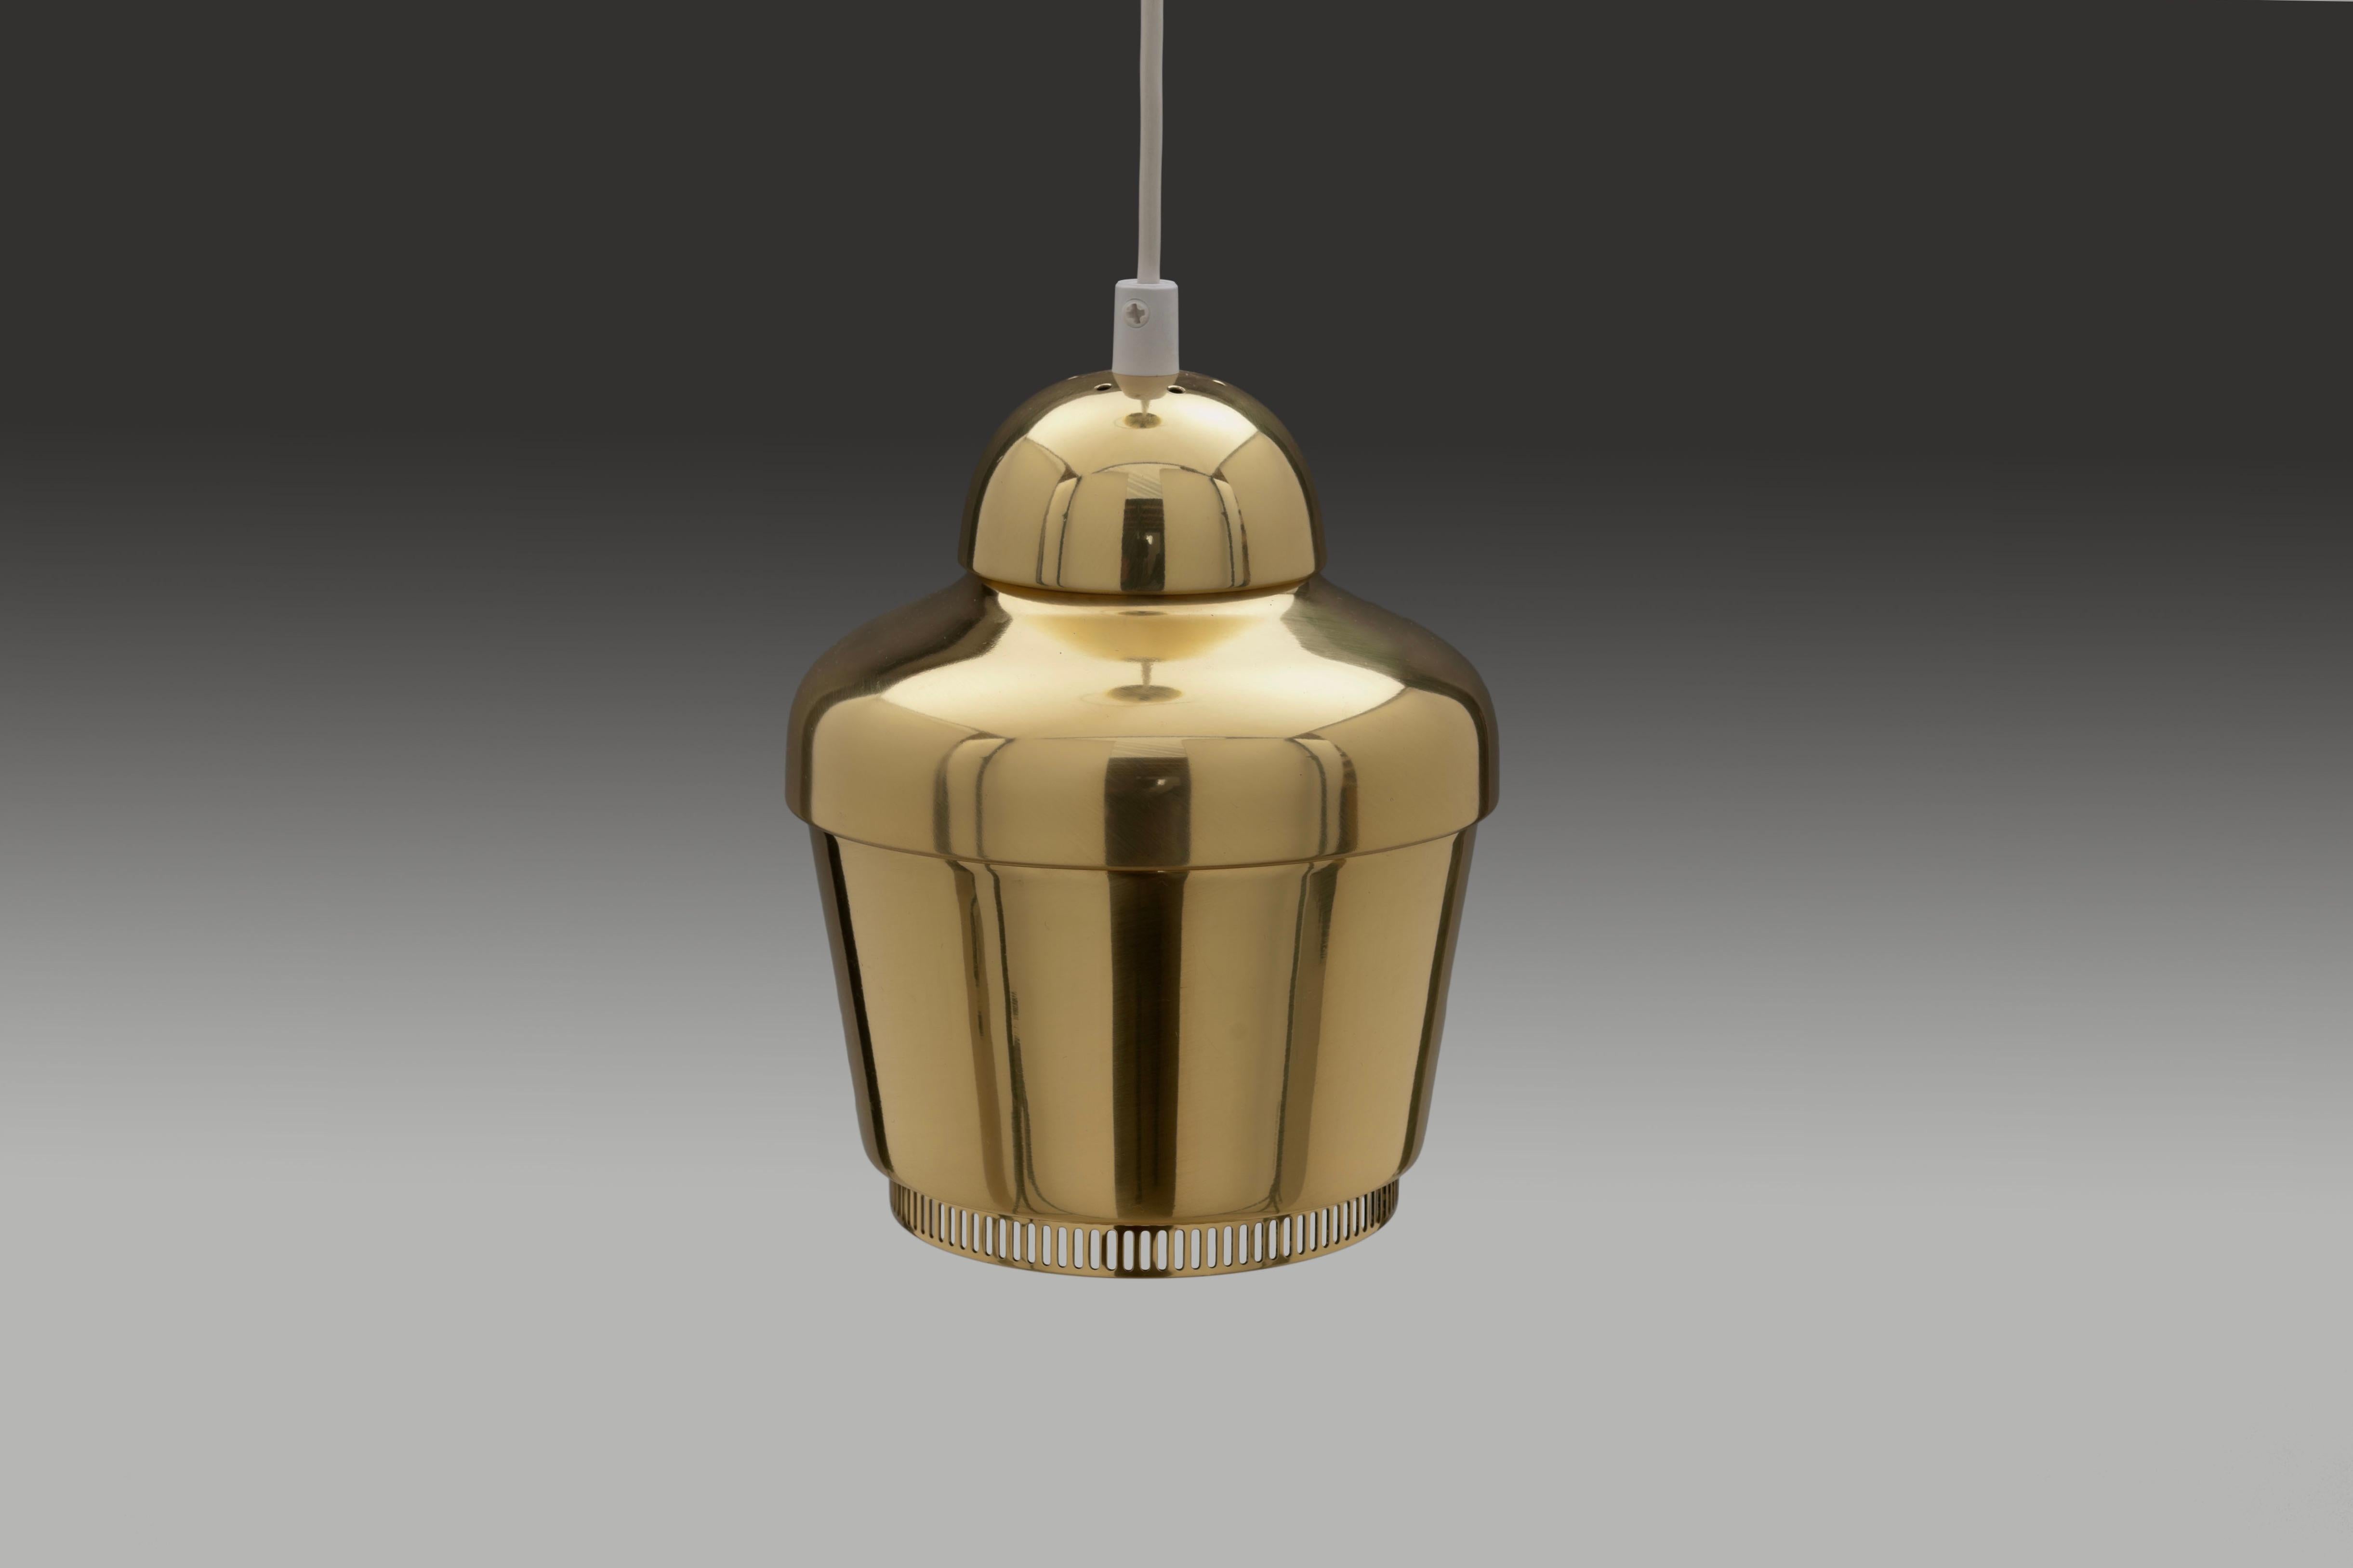 Brass 'Kultakello' Model A 330 'Golden Bell' Pendant by Alvar Aalto, Finland 2